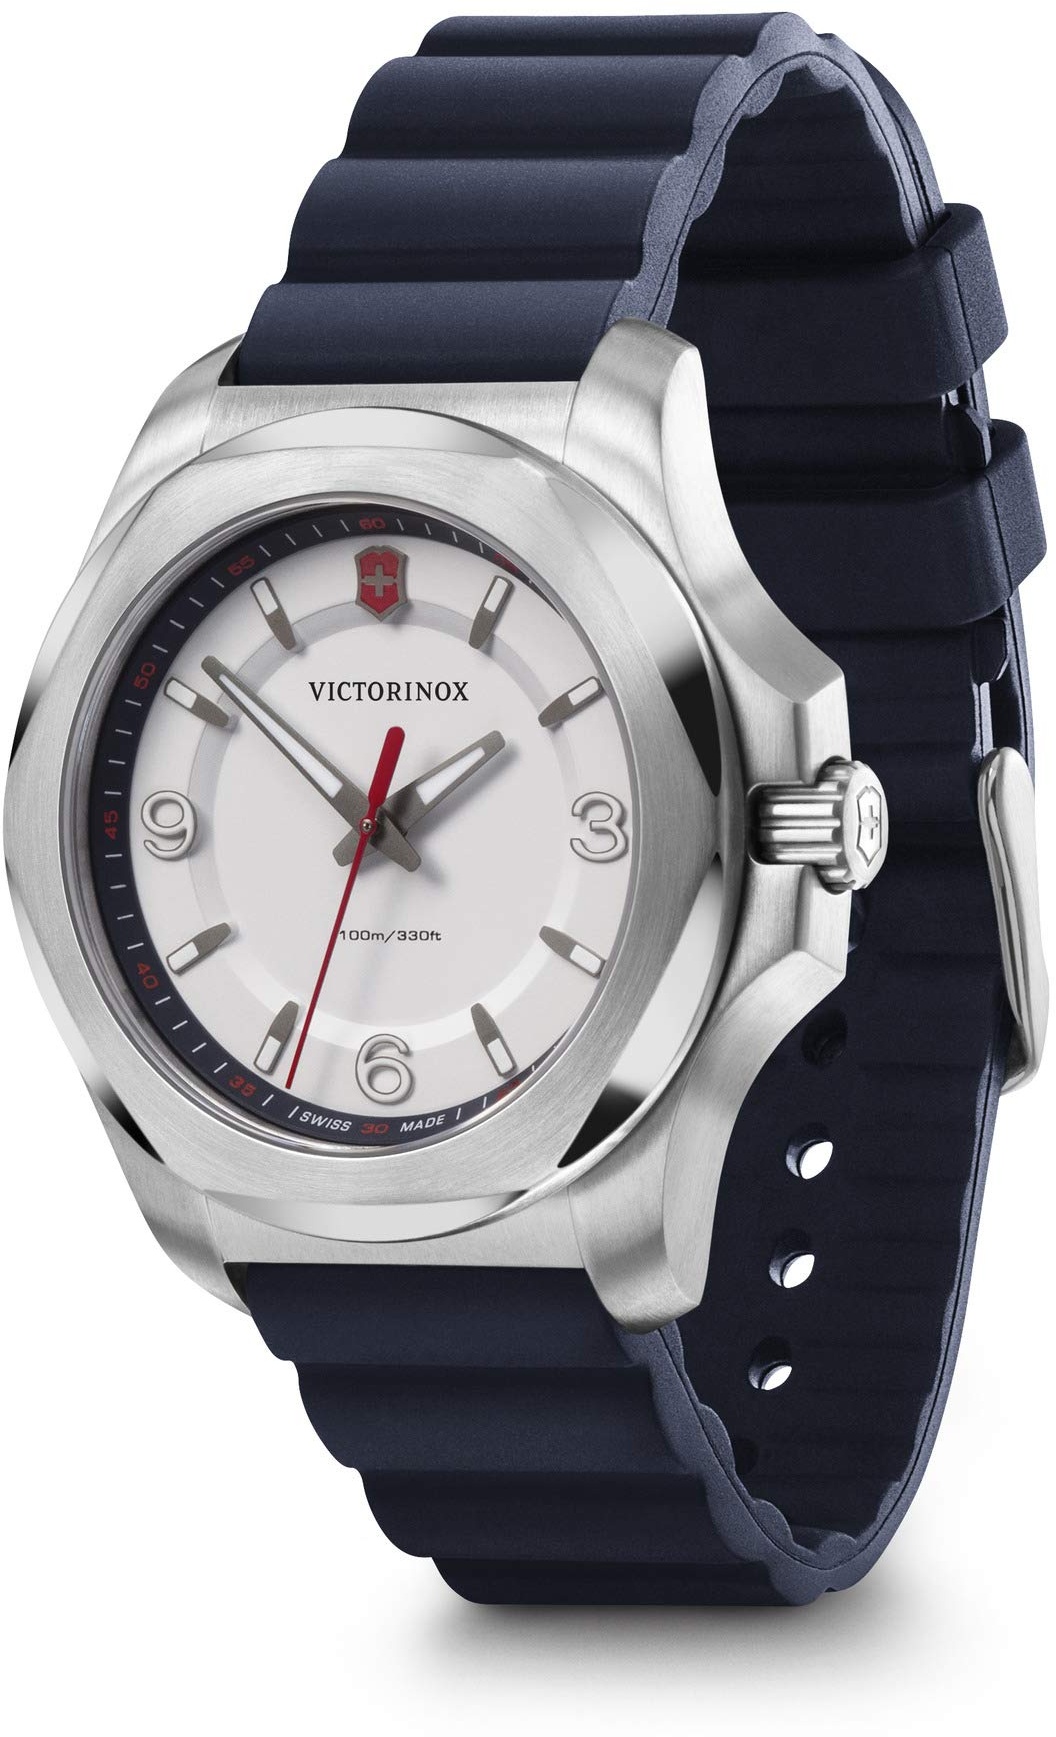 Victorinox Damen-Uhr I.N.O.X. V, Damen-Armbanduhr, analog, Quarz, Wasserdicht bis 100 m, Gehäuse-Ø 37 mm, Armband 18 mm, 68 g, Weiß/Blau